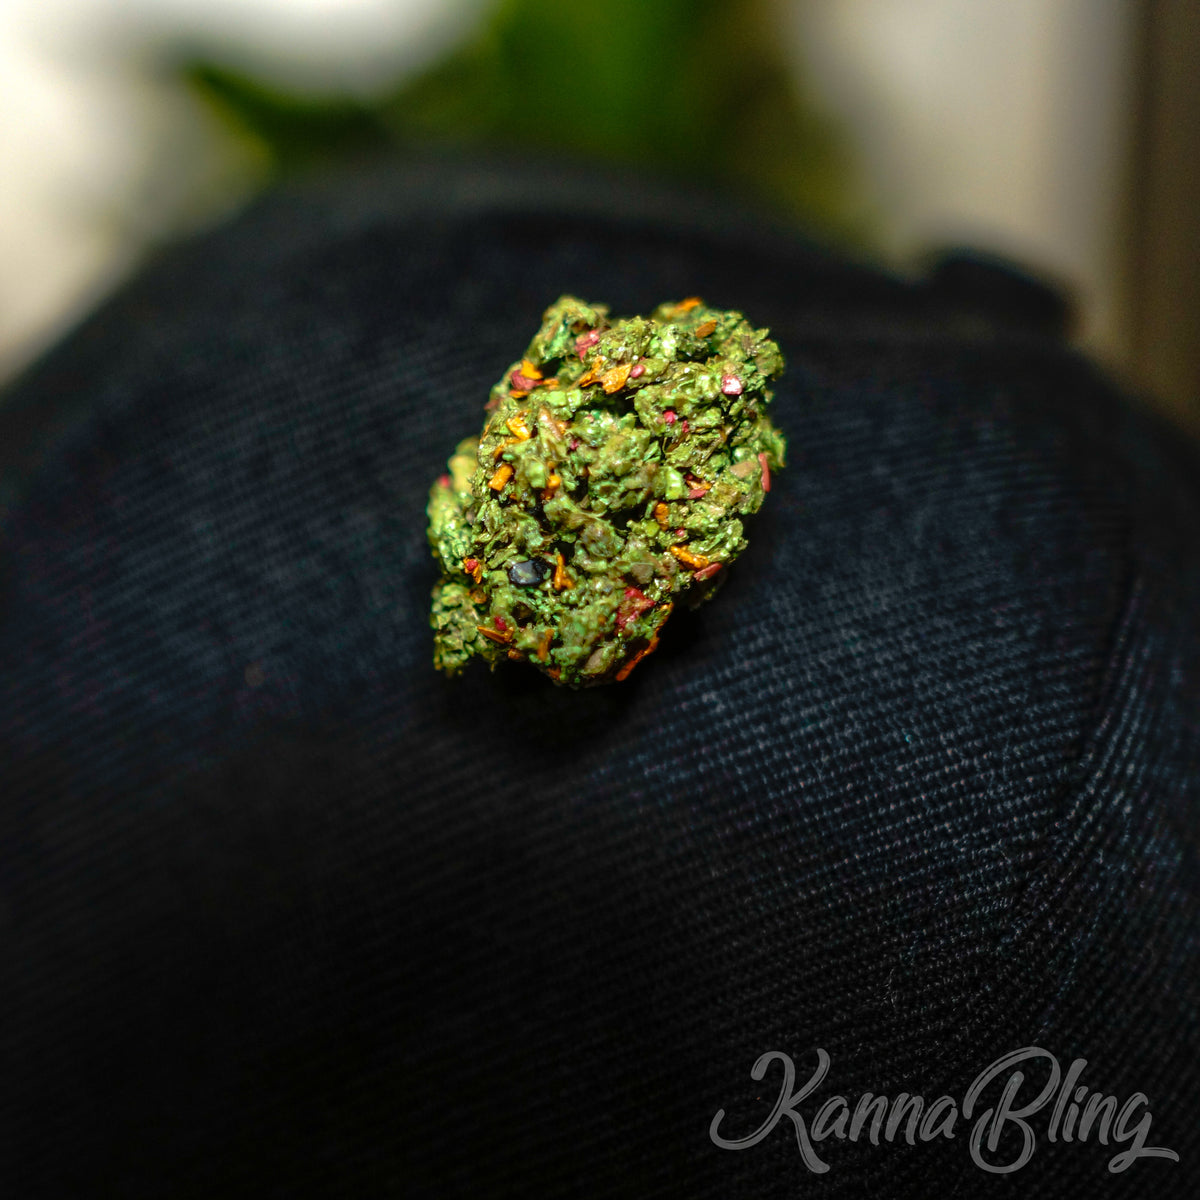 2  New Cannabis Republic lapel hat pins Marijuana Weed Bud you get 2 pins